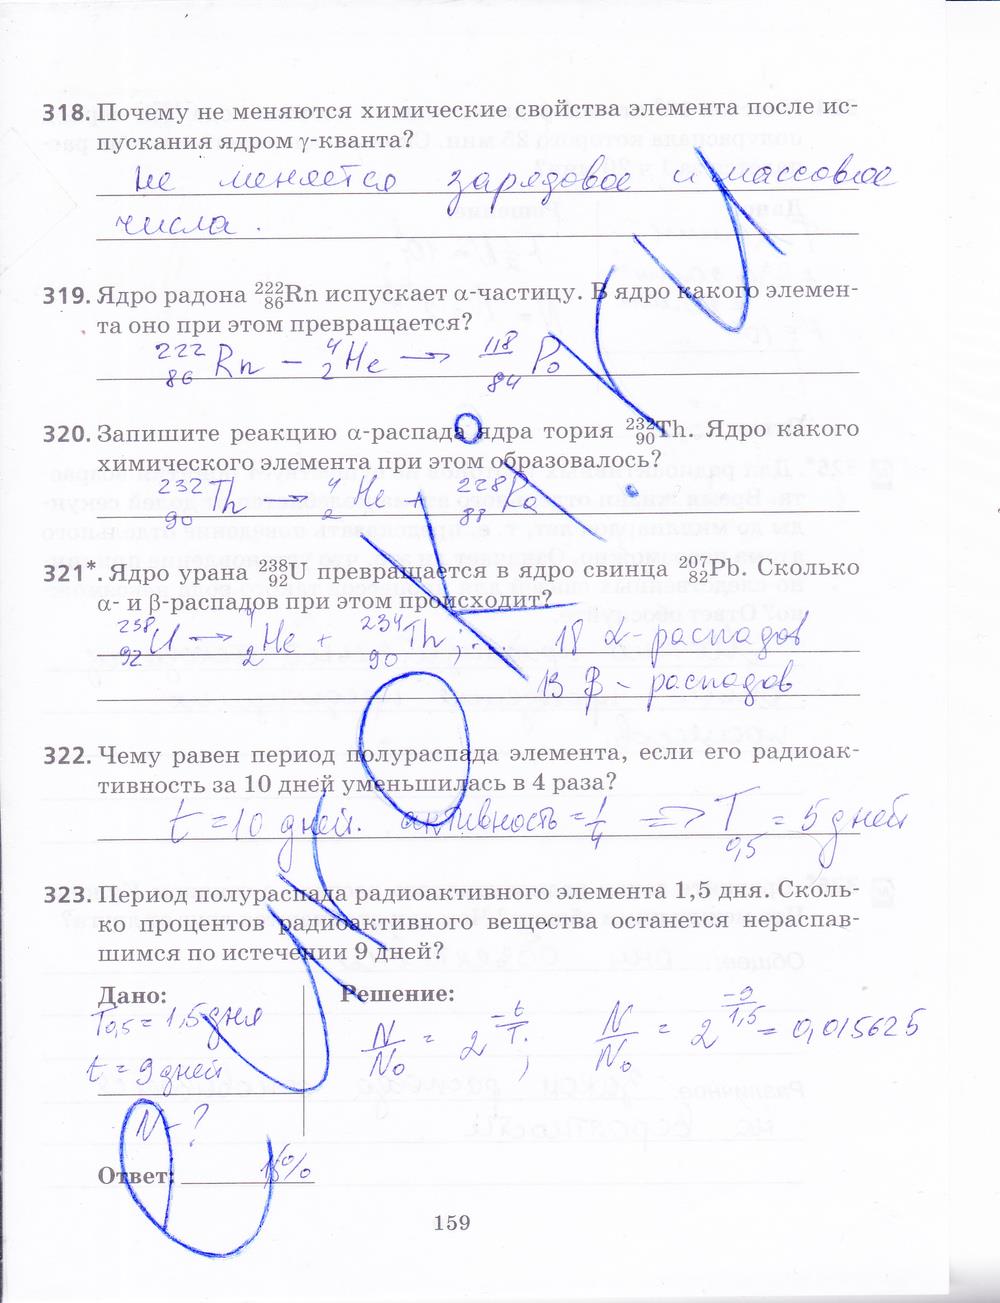 гдз 9 класс рабочая тетрадь страница 159 физика Пурышева, Важеевская, Чаругин